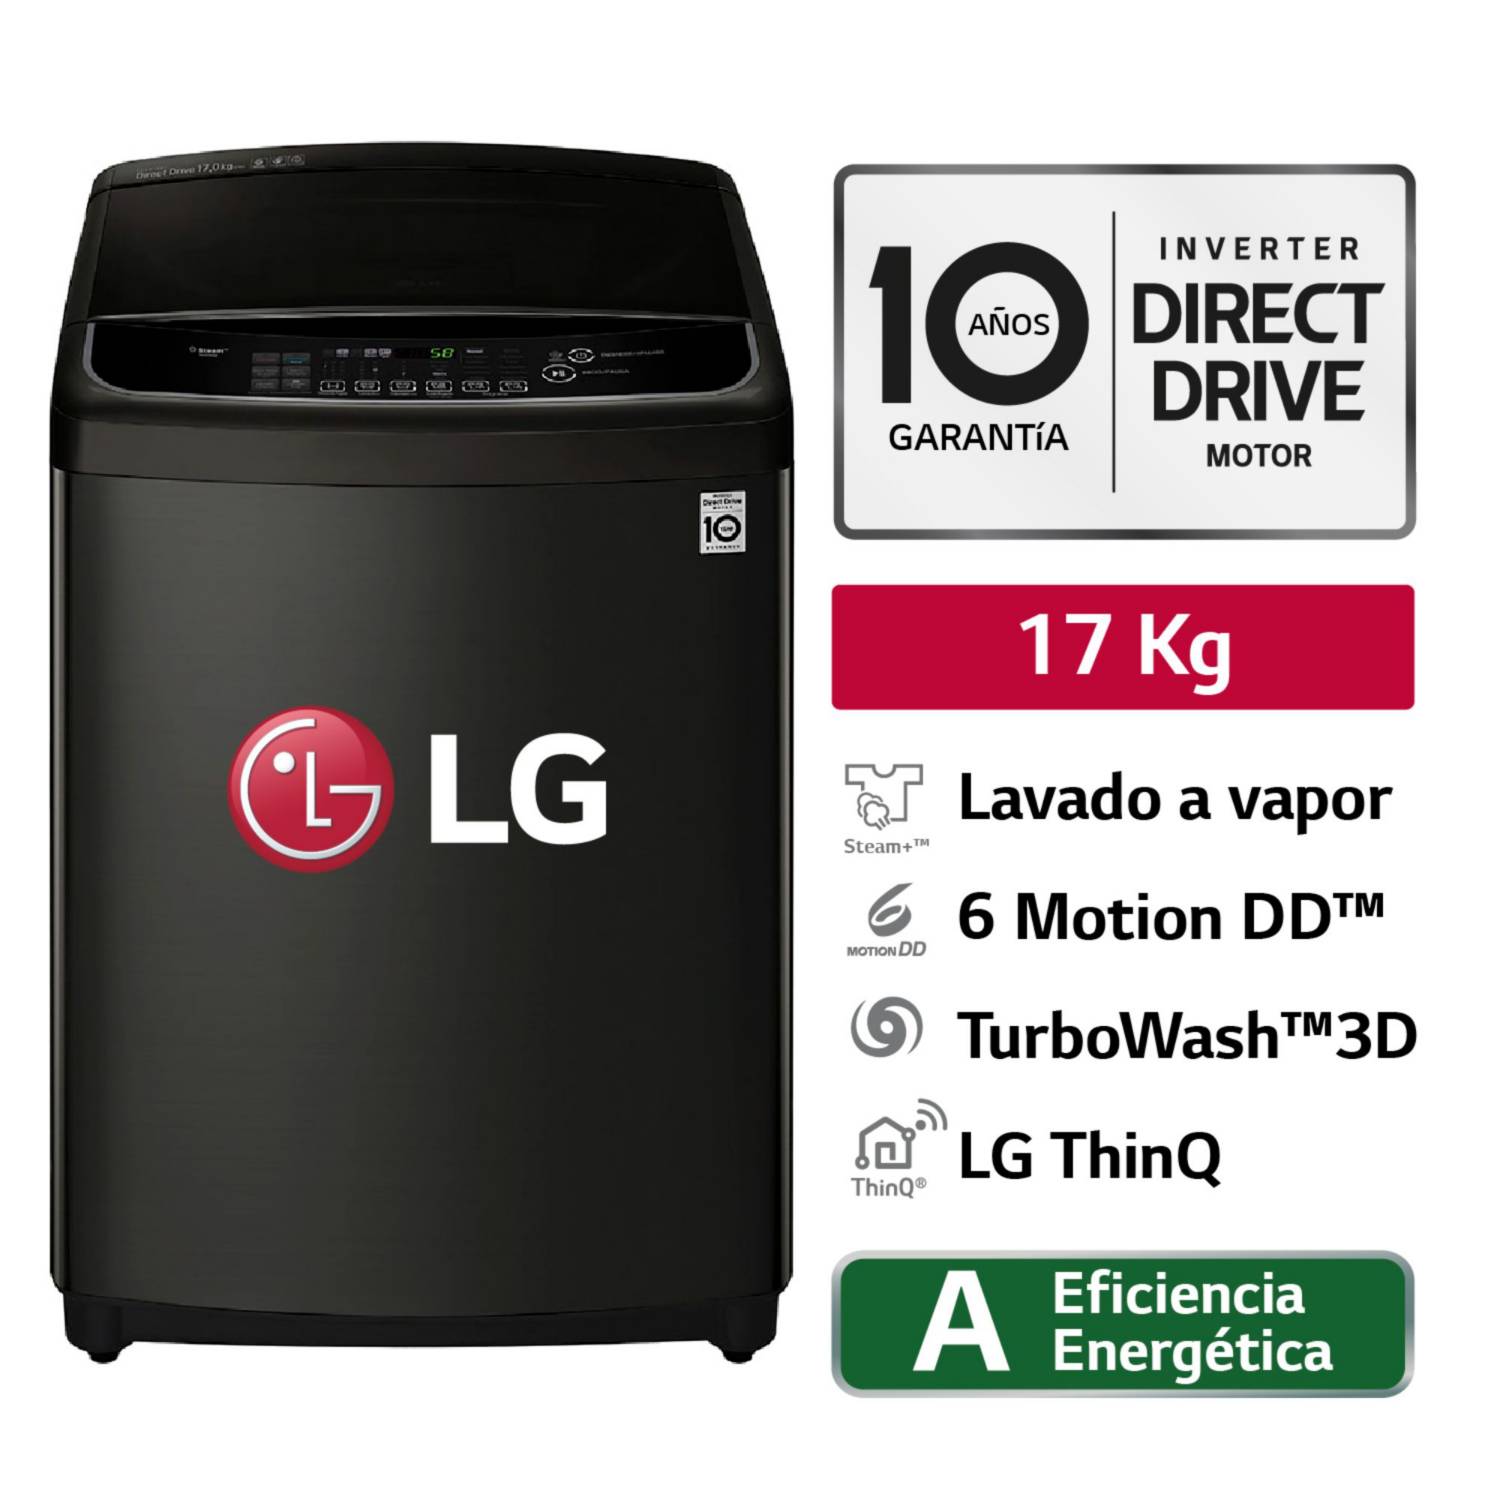 LG Kg Motor Directo Hedd WT17BSS6H Negro Platino | Sodimac Perú